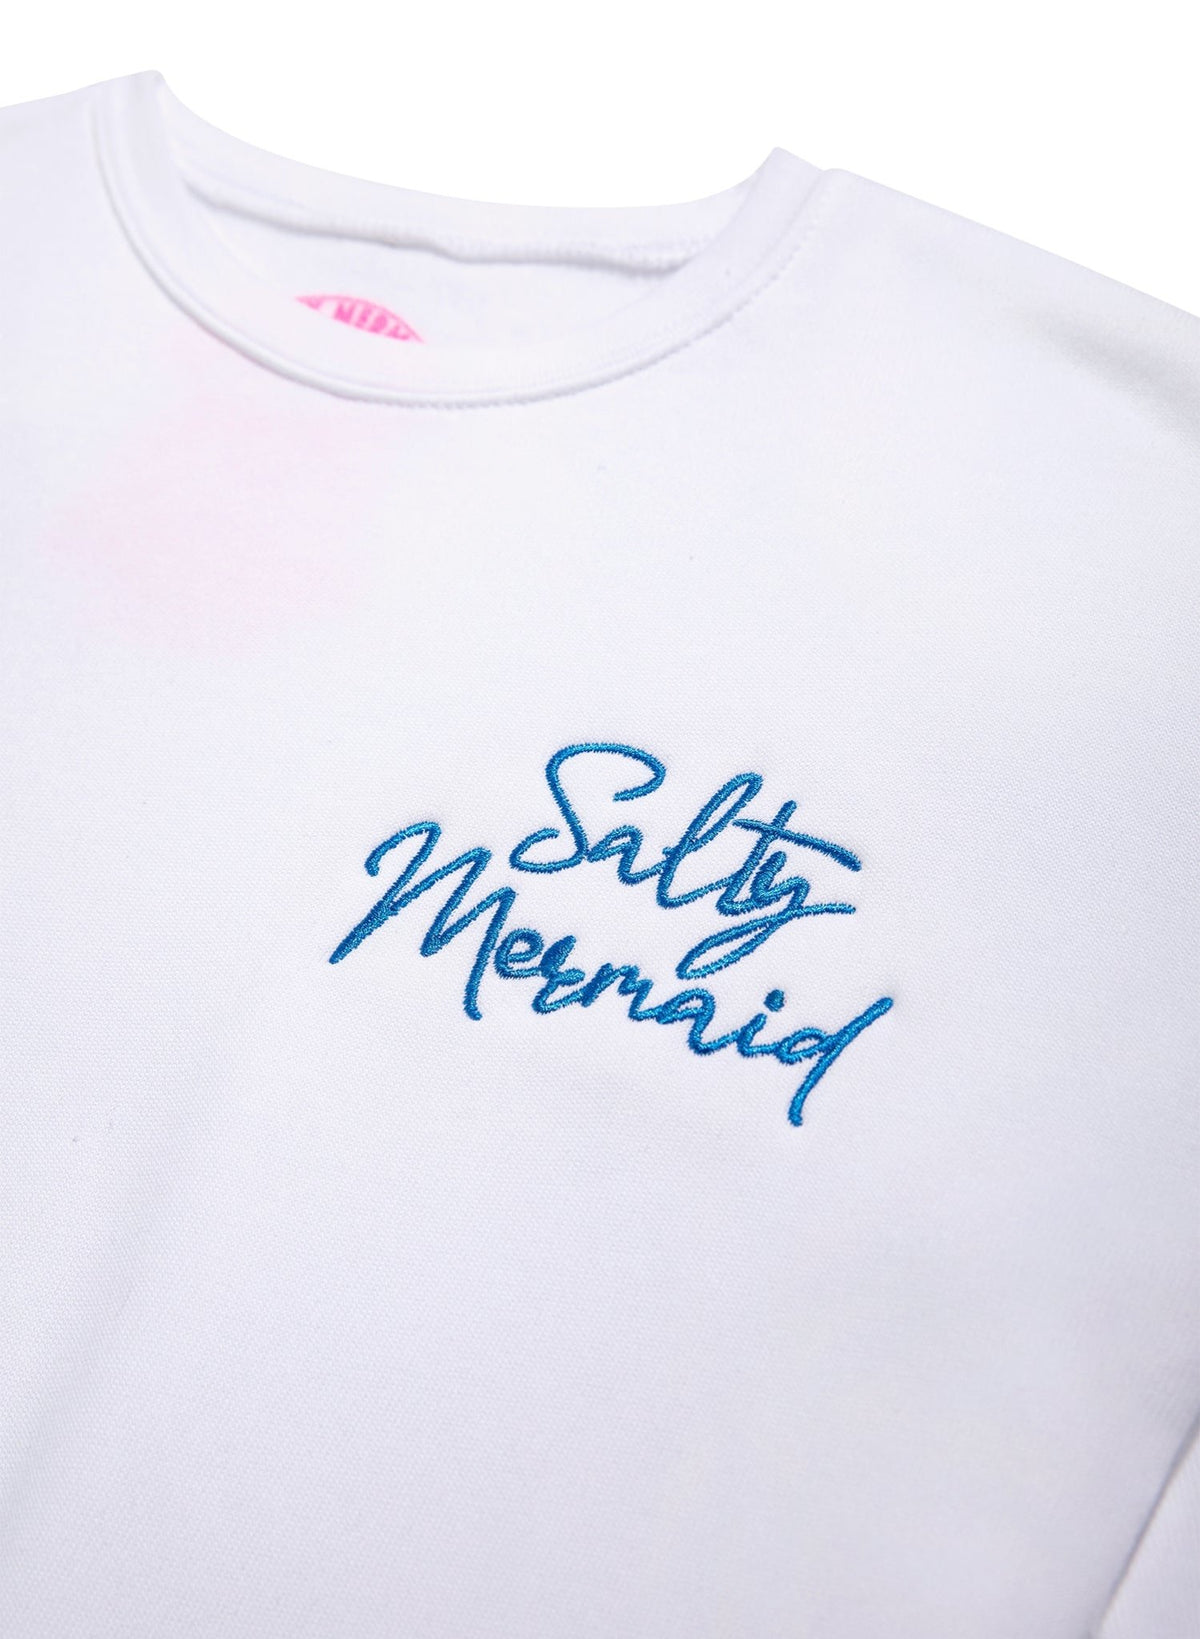 Sally Sold Seashells Crewneck Sweatshirt